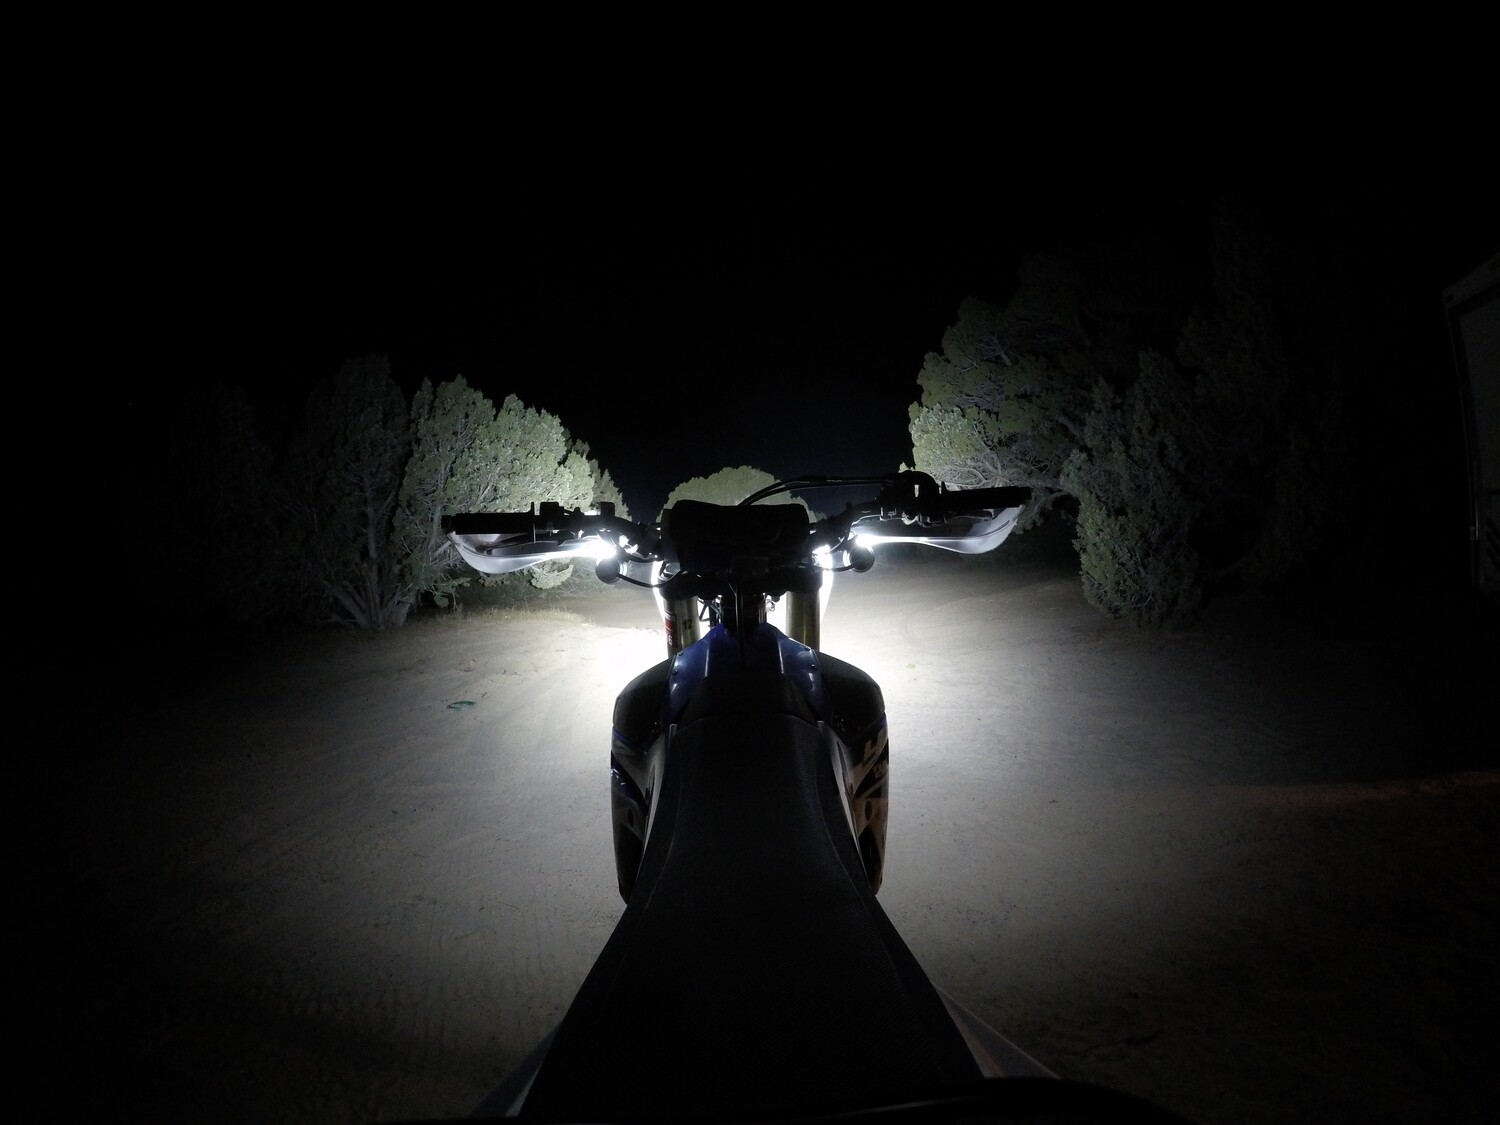 HandleBar Mounted Cree LED Projector Headlight